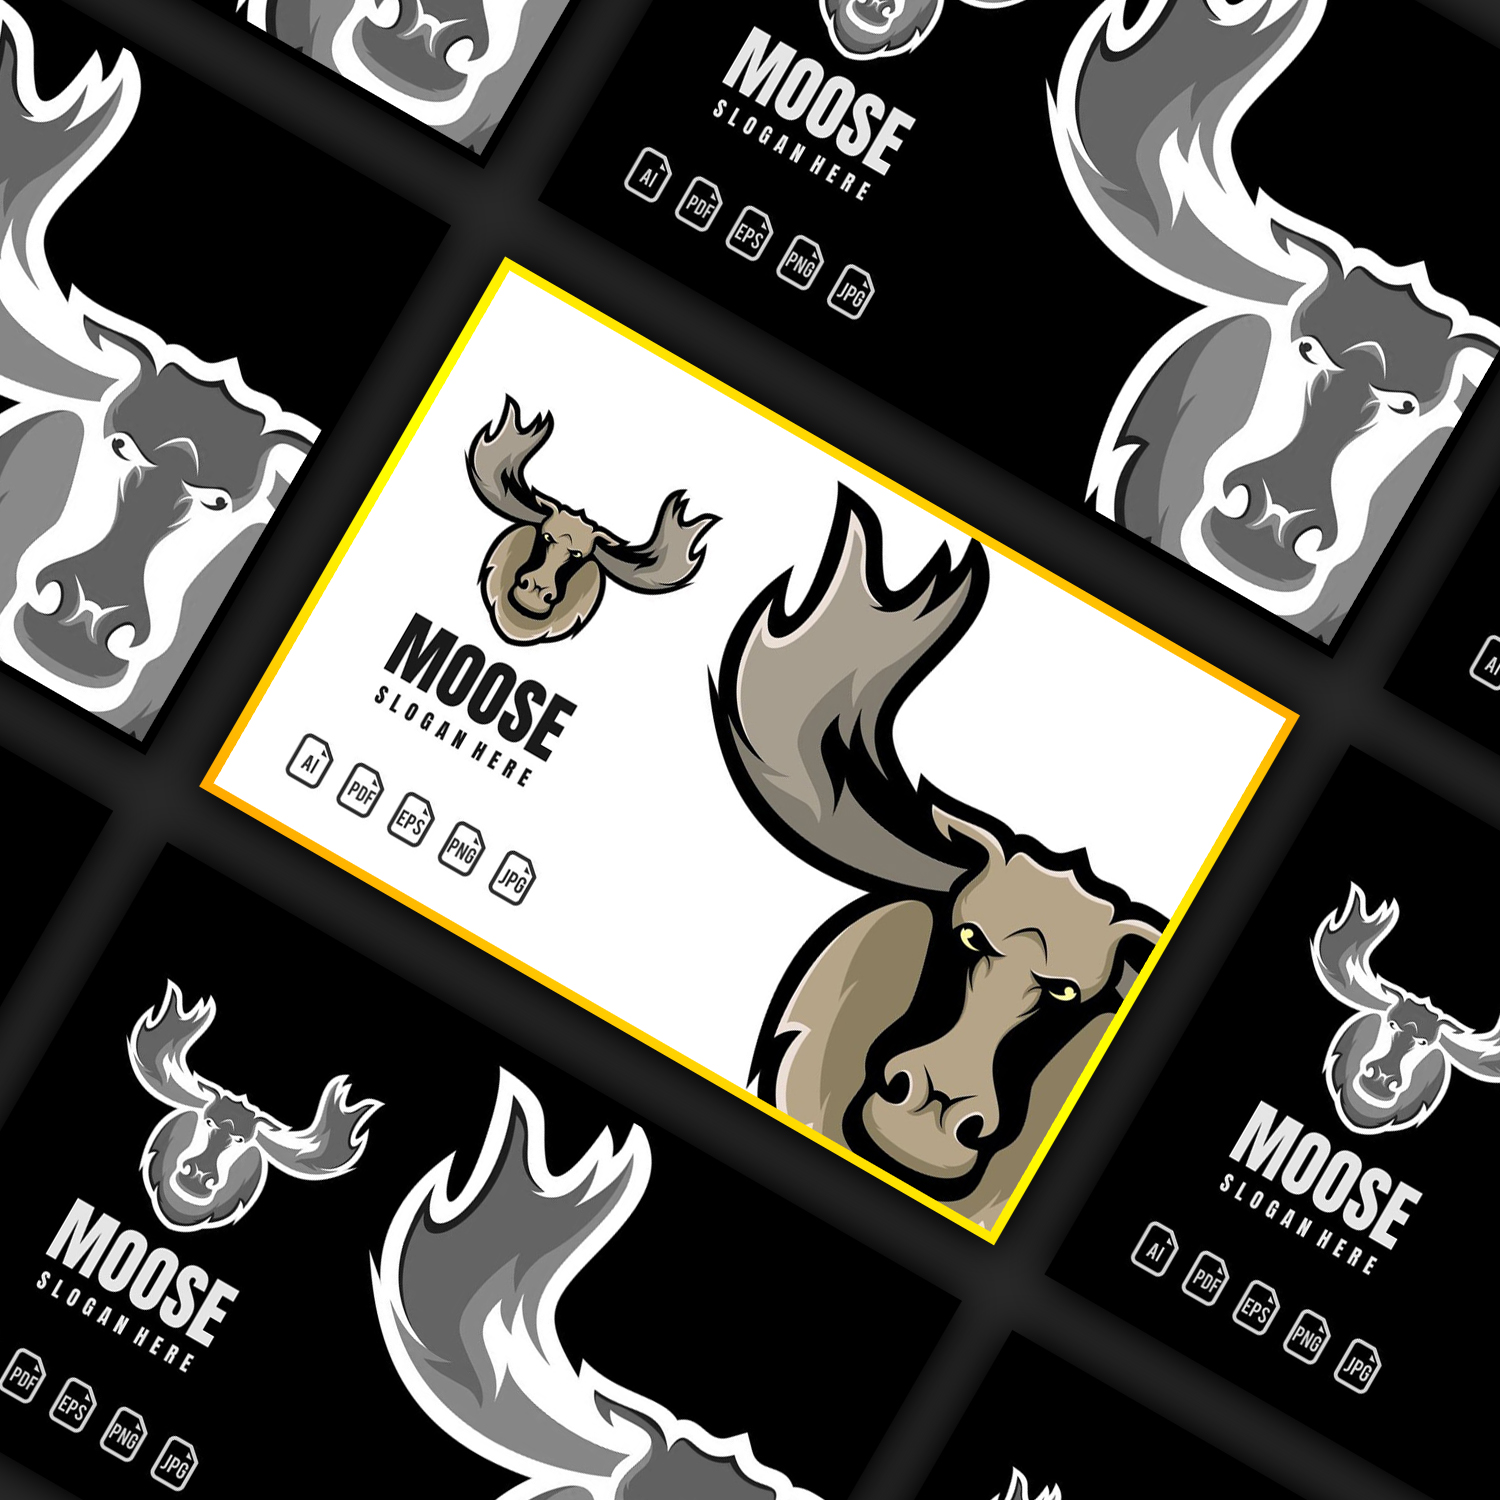 Preview moose mascot logo.